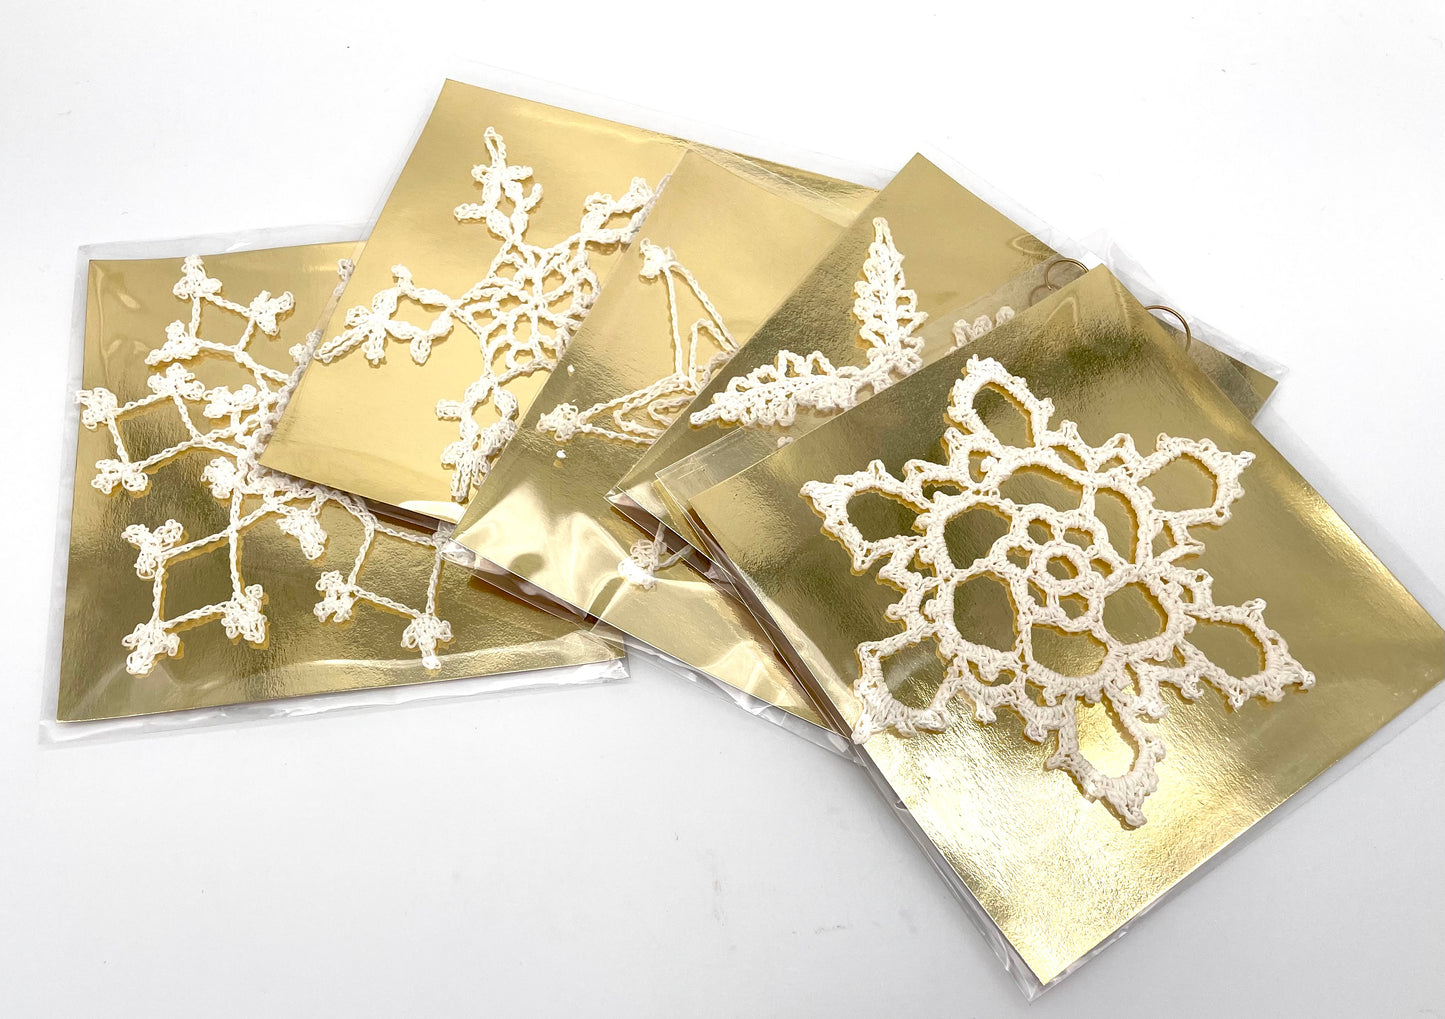 Handmade Lace Snowflake Ornaments